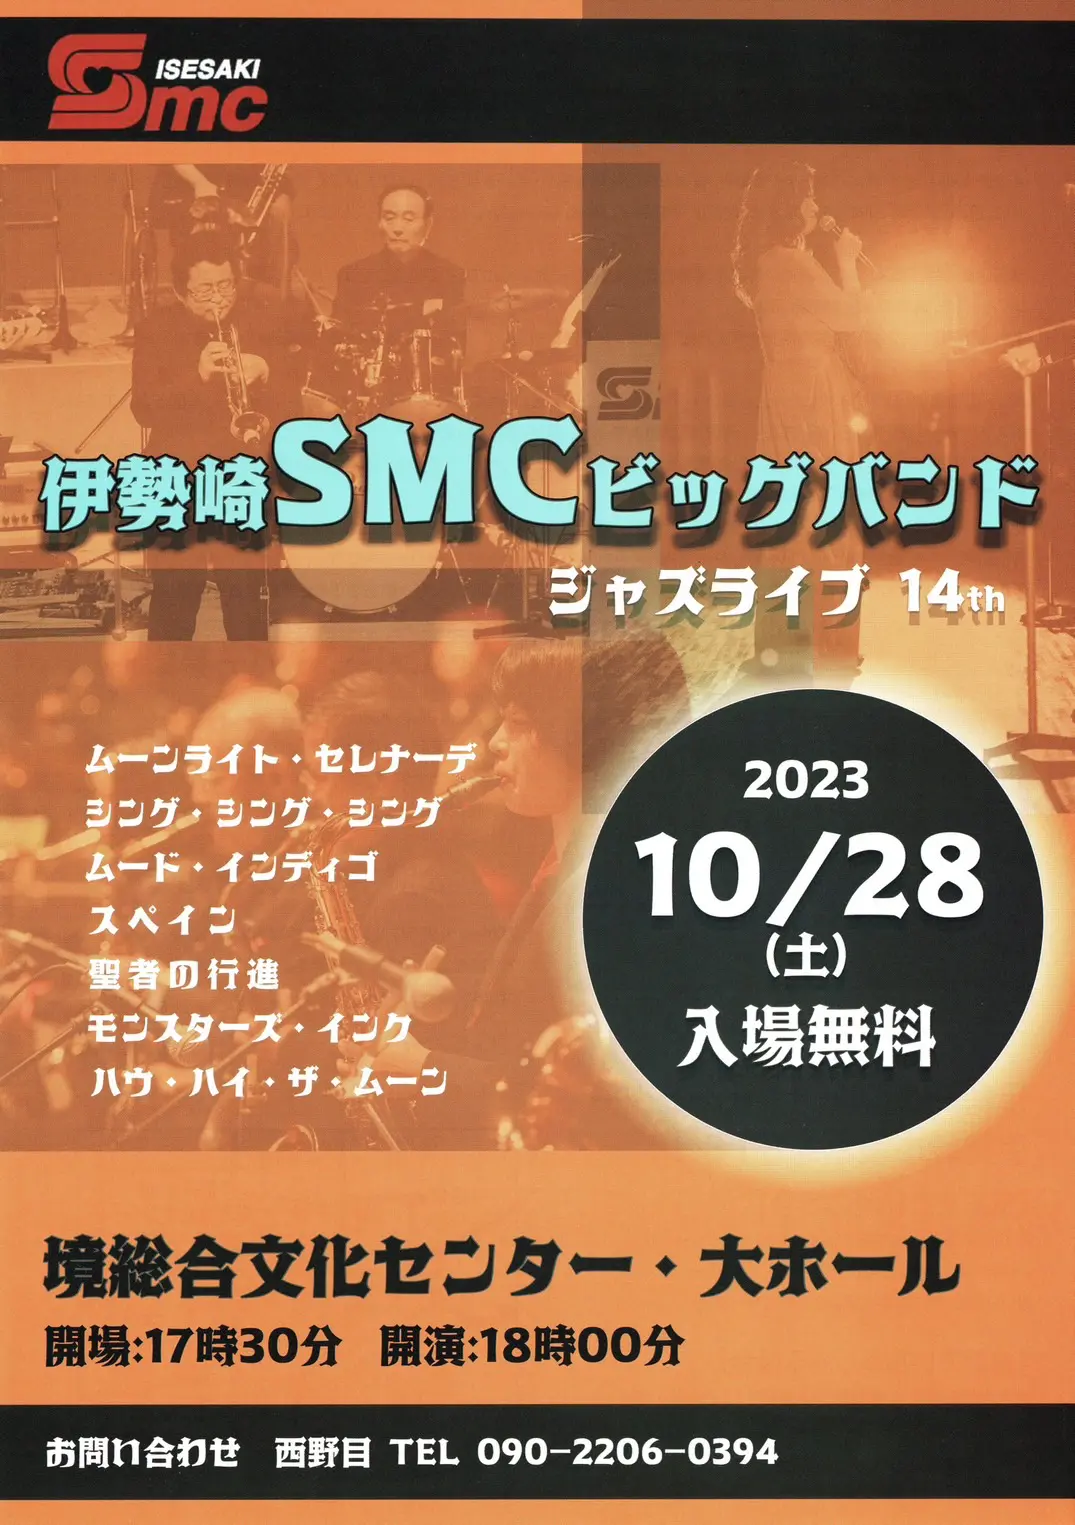 SMC Jazz Live 14th